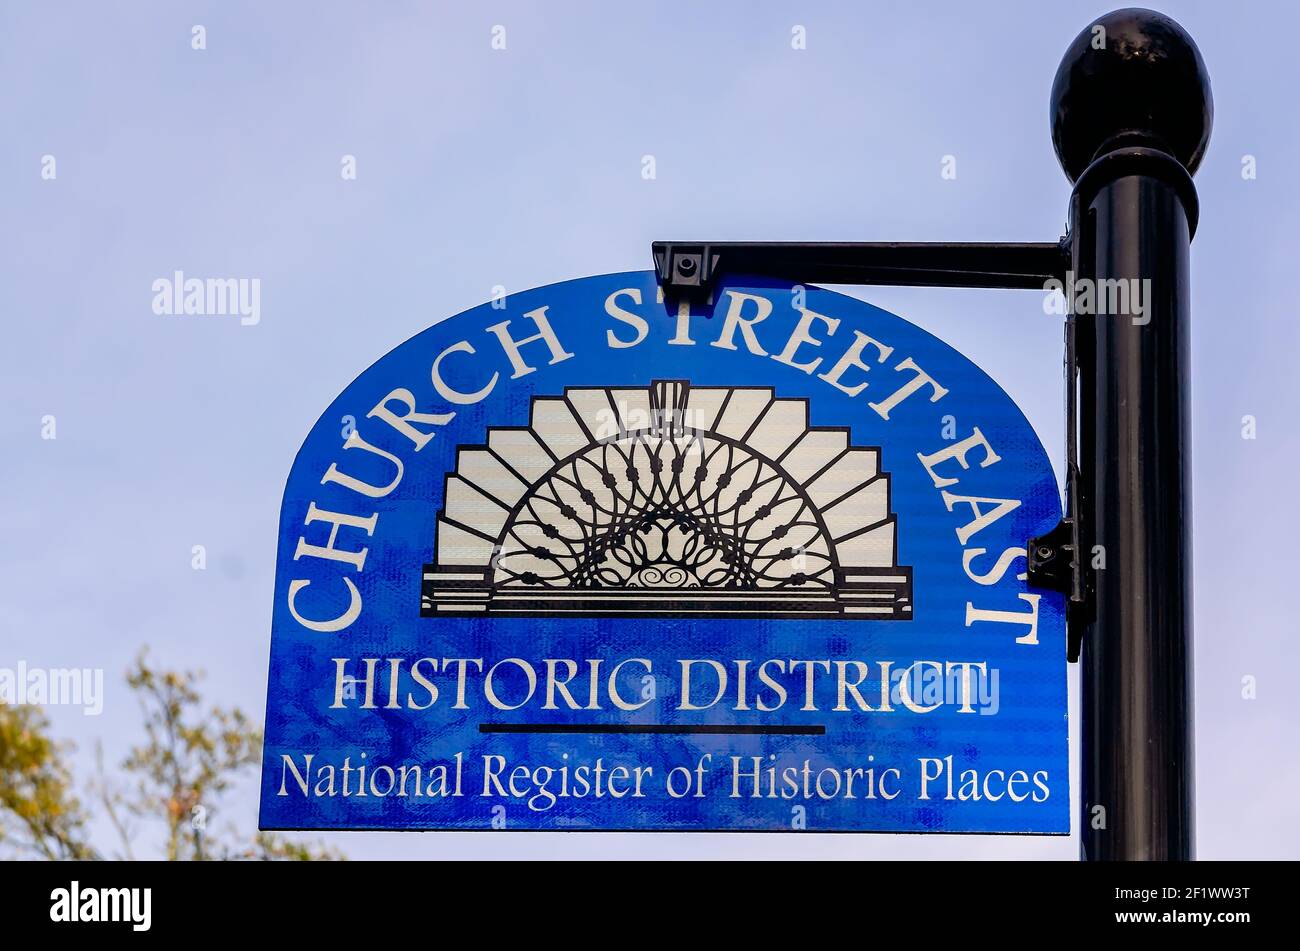 Der Church Street East Historic District ist abgebildet, 27. Februar 2021, in Mobile, Alabama. Stockfoto